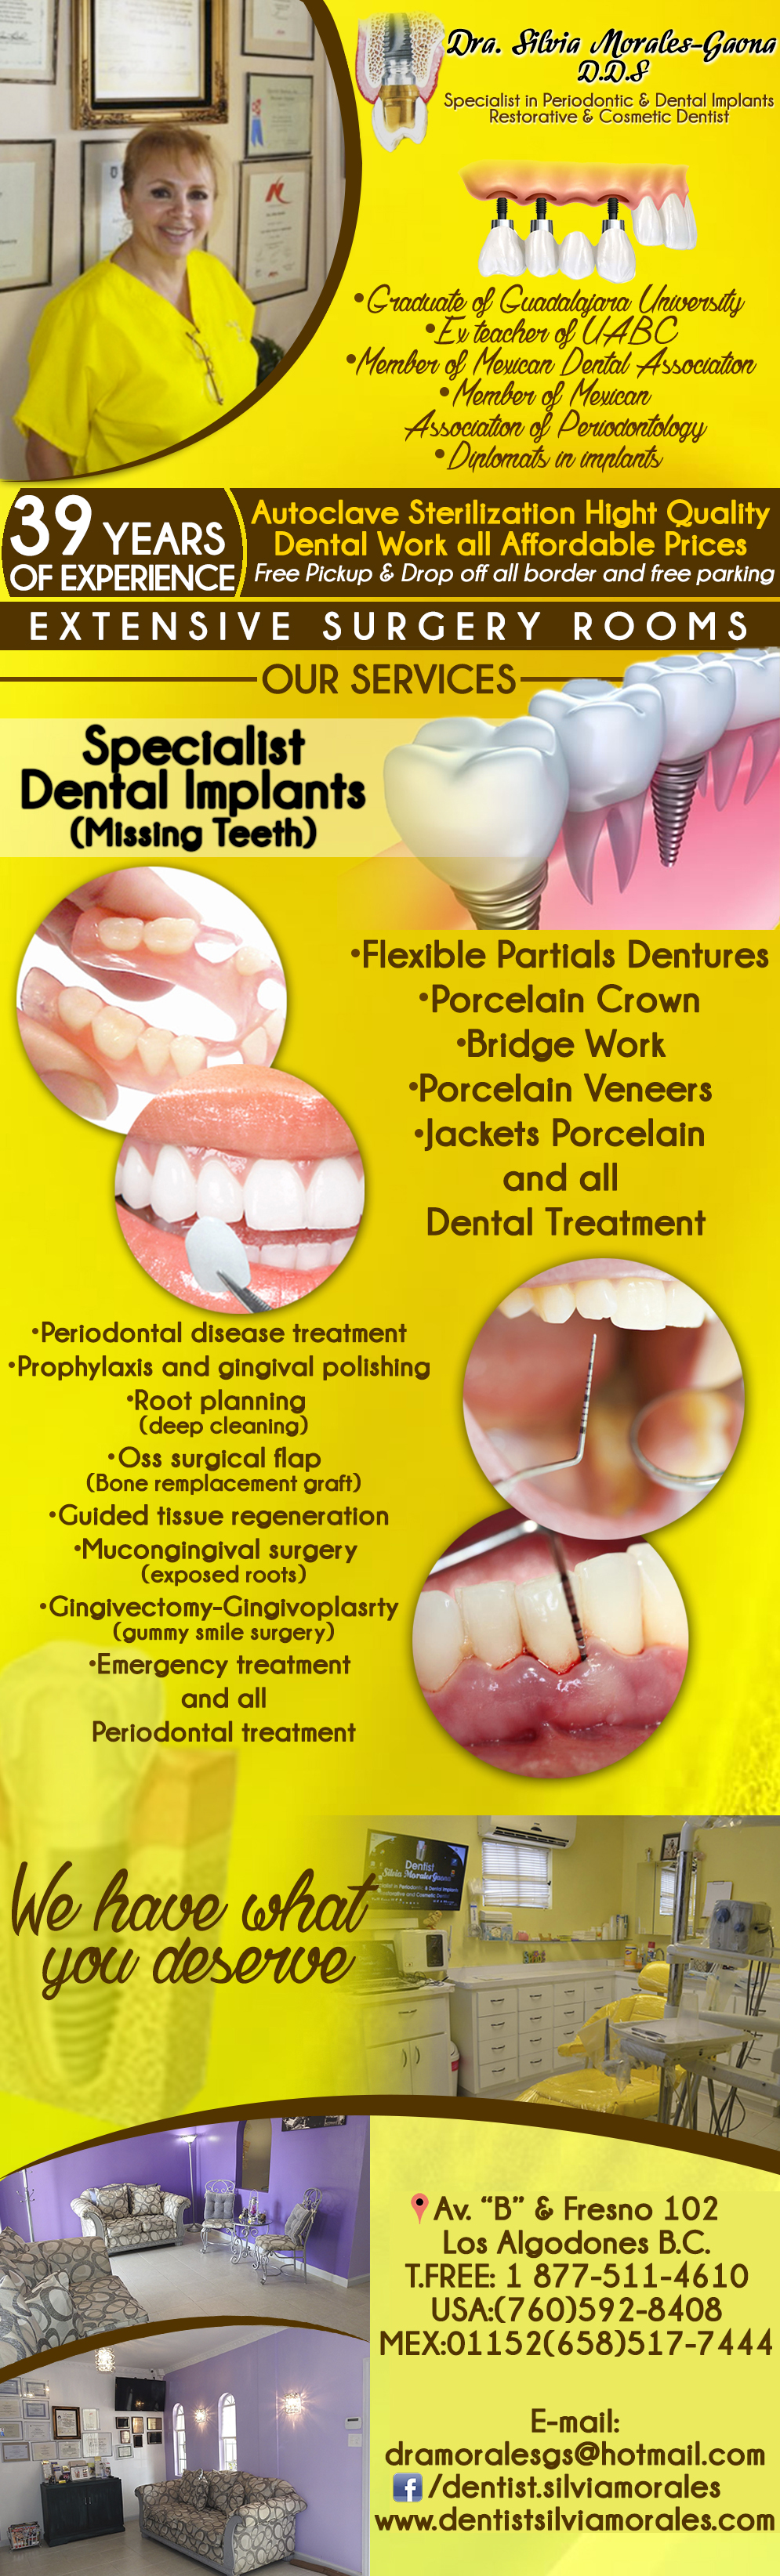 Dra. Silvia Morales-Gaona D.D.S. in Algodones  in Algodones  Specialist in Periodontic & Dental Implants, Restorative & Cosmetic Dentist. Flexible Partials Dentures, Porcelain Crown, Bridge Work, Porcelain Veneers, Jackets Porcelain and all Dental Treatment.             Specialist in Periodontic & Dental Implants, Restorative & Cosmetic Dentist.
Tooth-Colored Fillings 
Porcelain Veneers 
Lumineers 
Whitening 
Bonding 
All-Porcelain Crowns, Onlays, & Inlays 
Recontouring 
Smile Designs 
Smile Rejuvenation
Cosmetic Dentistry
	Bonding
	Veneers
	Jackets
	Inlays
	Onlays
	Porcelain or Metal Crowns
	Teeth Whitening
	Immediate Upper & Lower Dentures (Alveoplasty)
	Orthodontics

			Traditional Acrylic Dentures
	Traditional Partials
	Flexible Full Dentures
	Molloplast Dentures
	Flexible Valplast Dentures
	Metal Bridges 
	Porcelain Bridges
	Porcelain Bridges with Gold


 			Root Canals
	Metal Posts
	Composite Posts
	White Fillings
	Partials
	Denture Repairs
	Relines
	Proflex Dentures
	TCS Flexible Partials
	Extractions
	Flexible & Aesthetic Partials

			Deep Cleaning
	Traditional Cleaning
	Fluoride Treatments
	General Oral Surgery
	Prescriptions
	Sedation
	Space Maintainers
	X-Rays
	Tooth Transplantation
	Implants
	Tissue Resculpting            